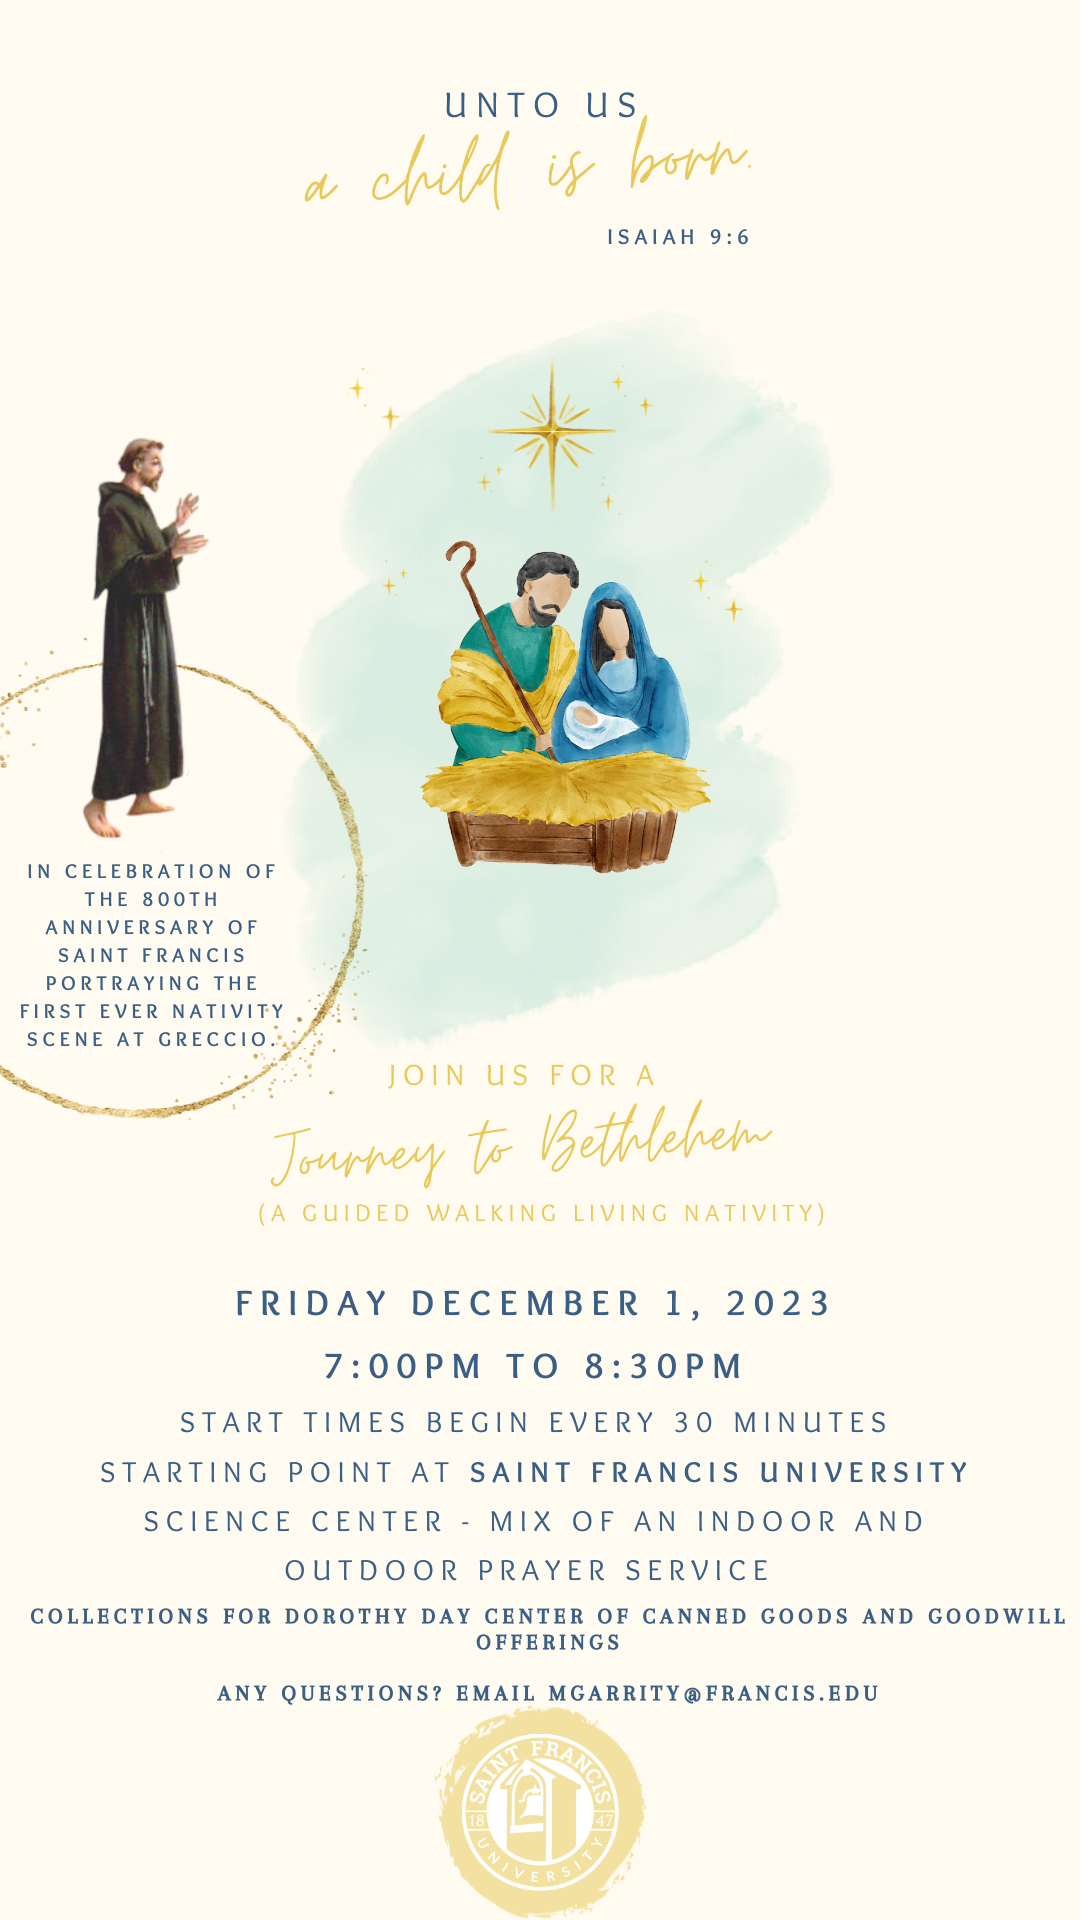 Live Nativity at Saint Francis University